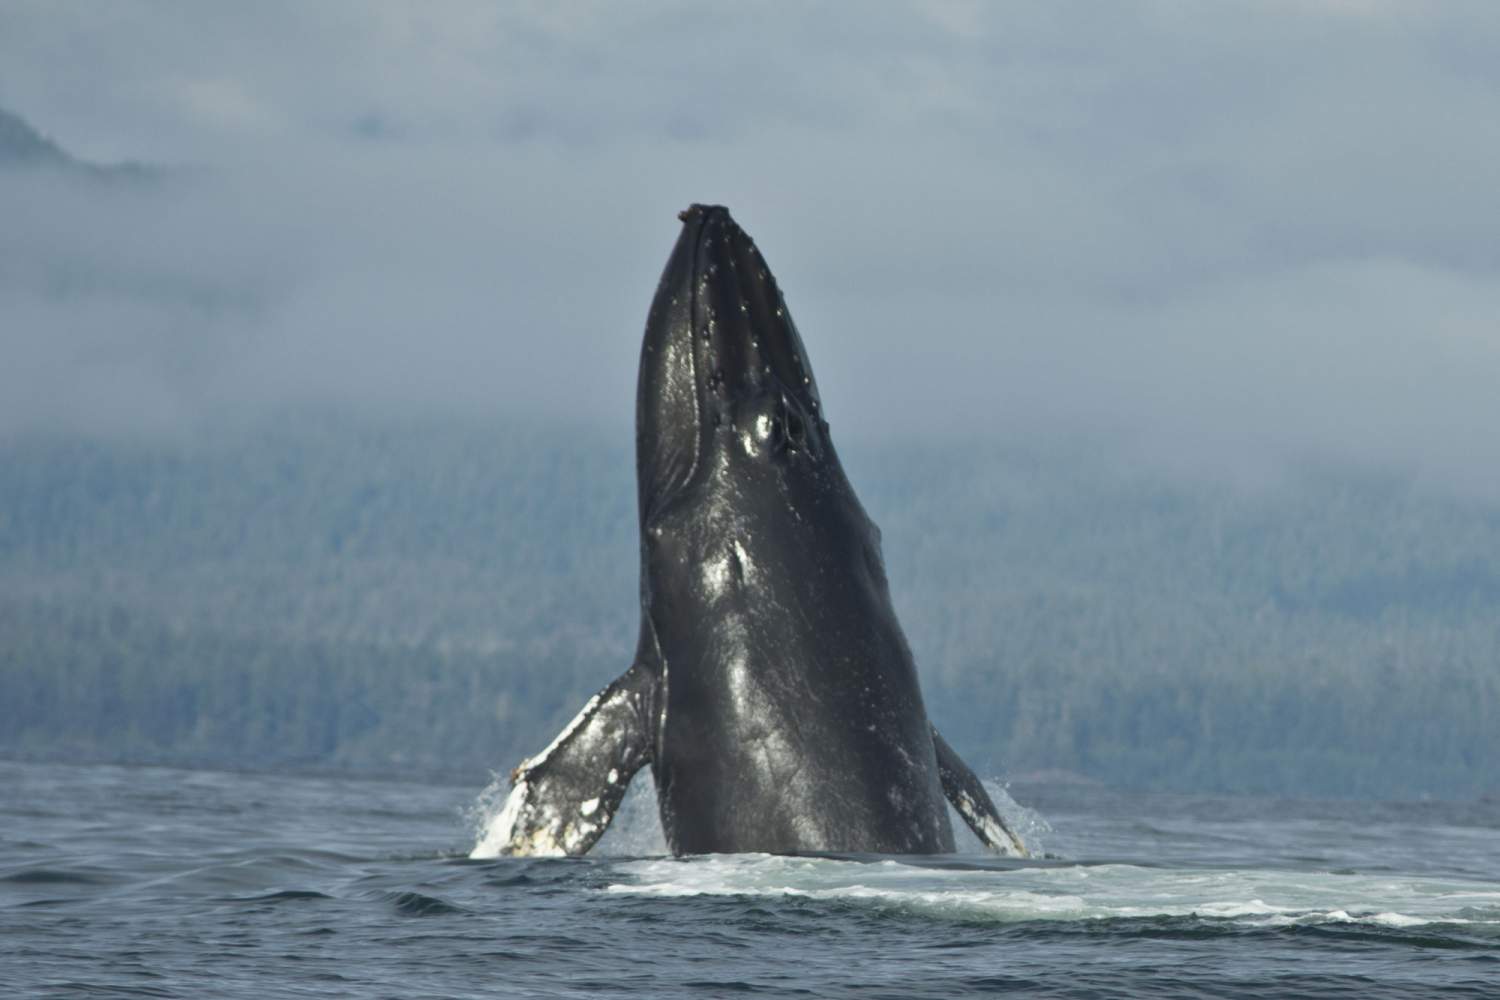 Humpback whale seen in Tofino